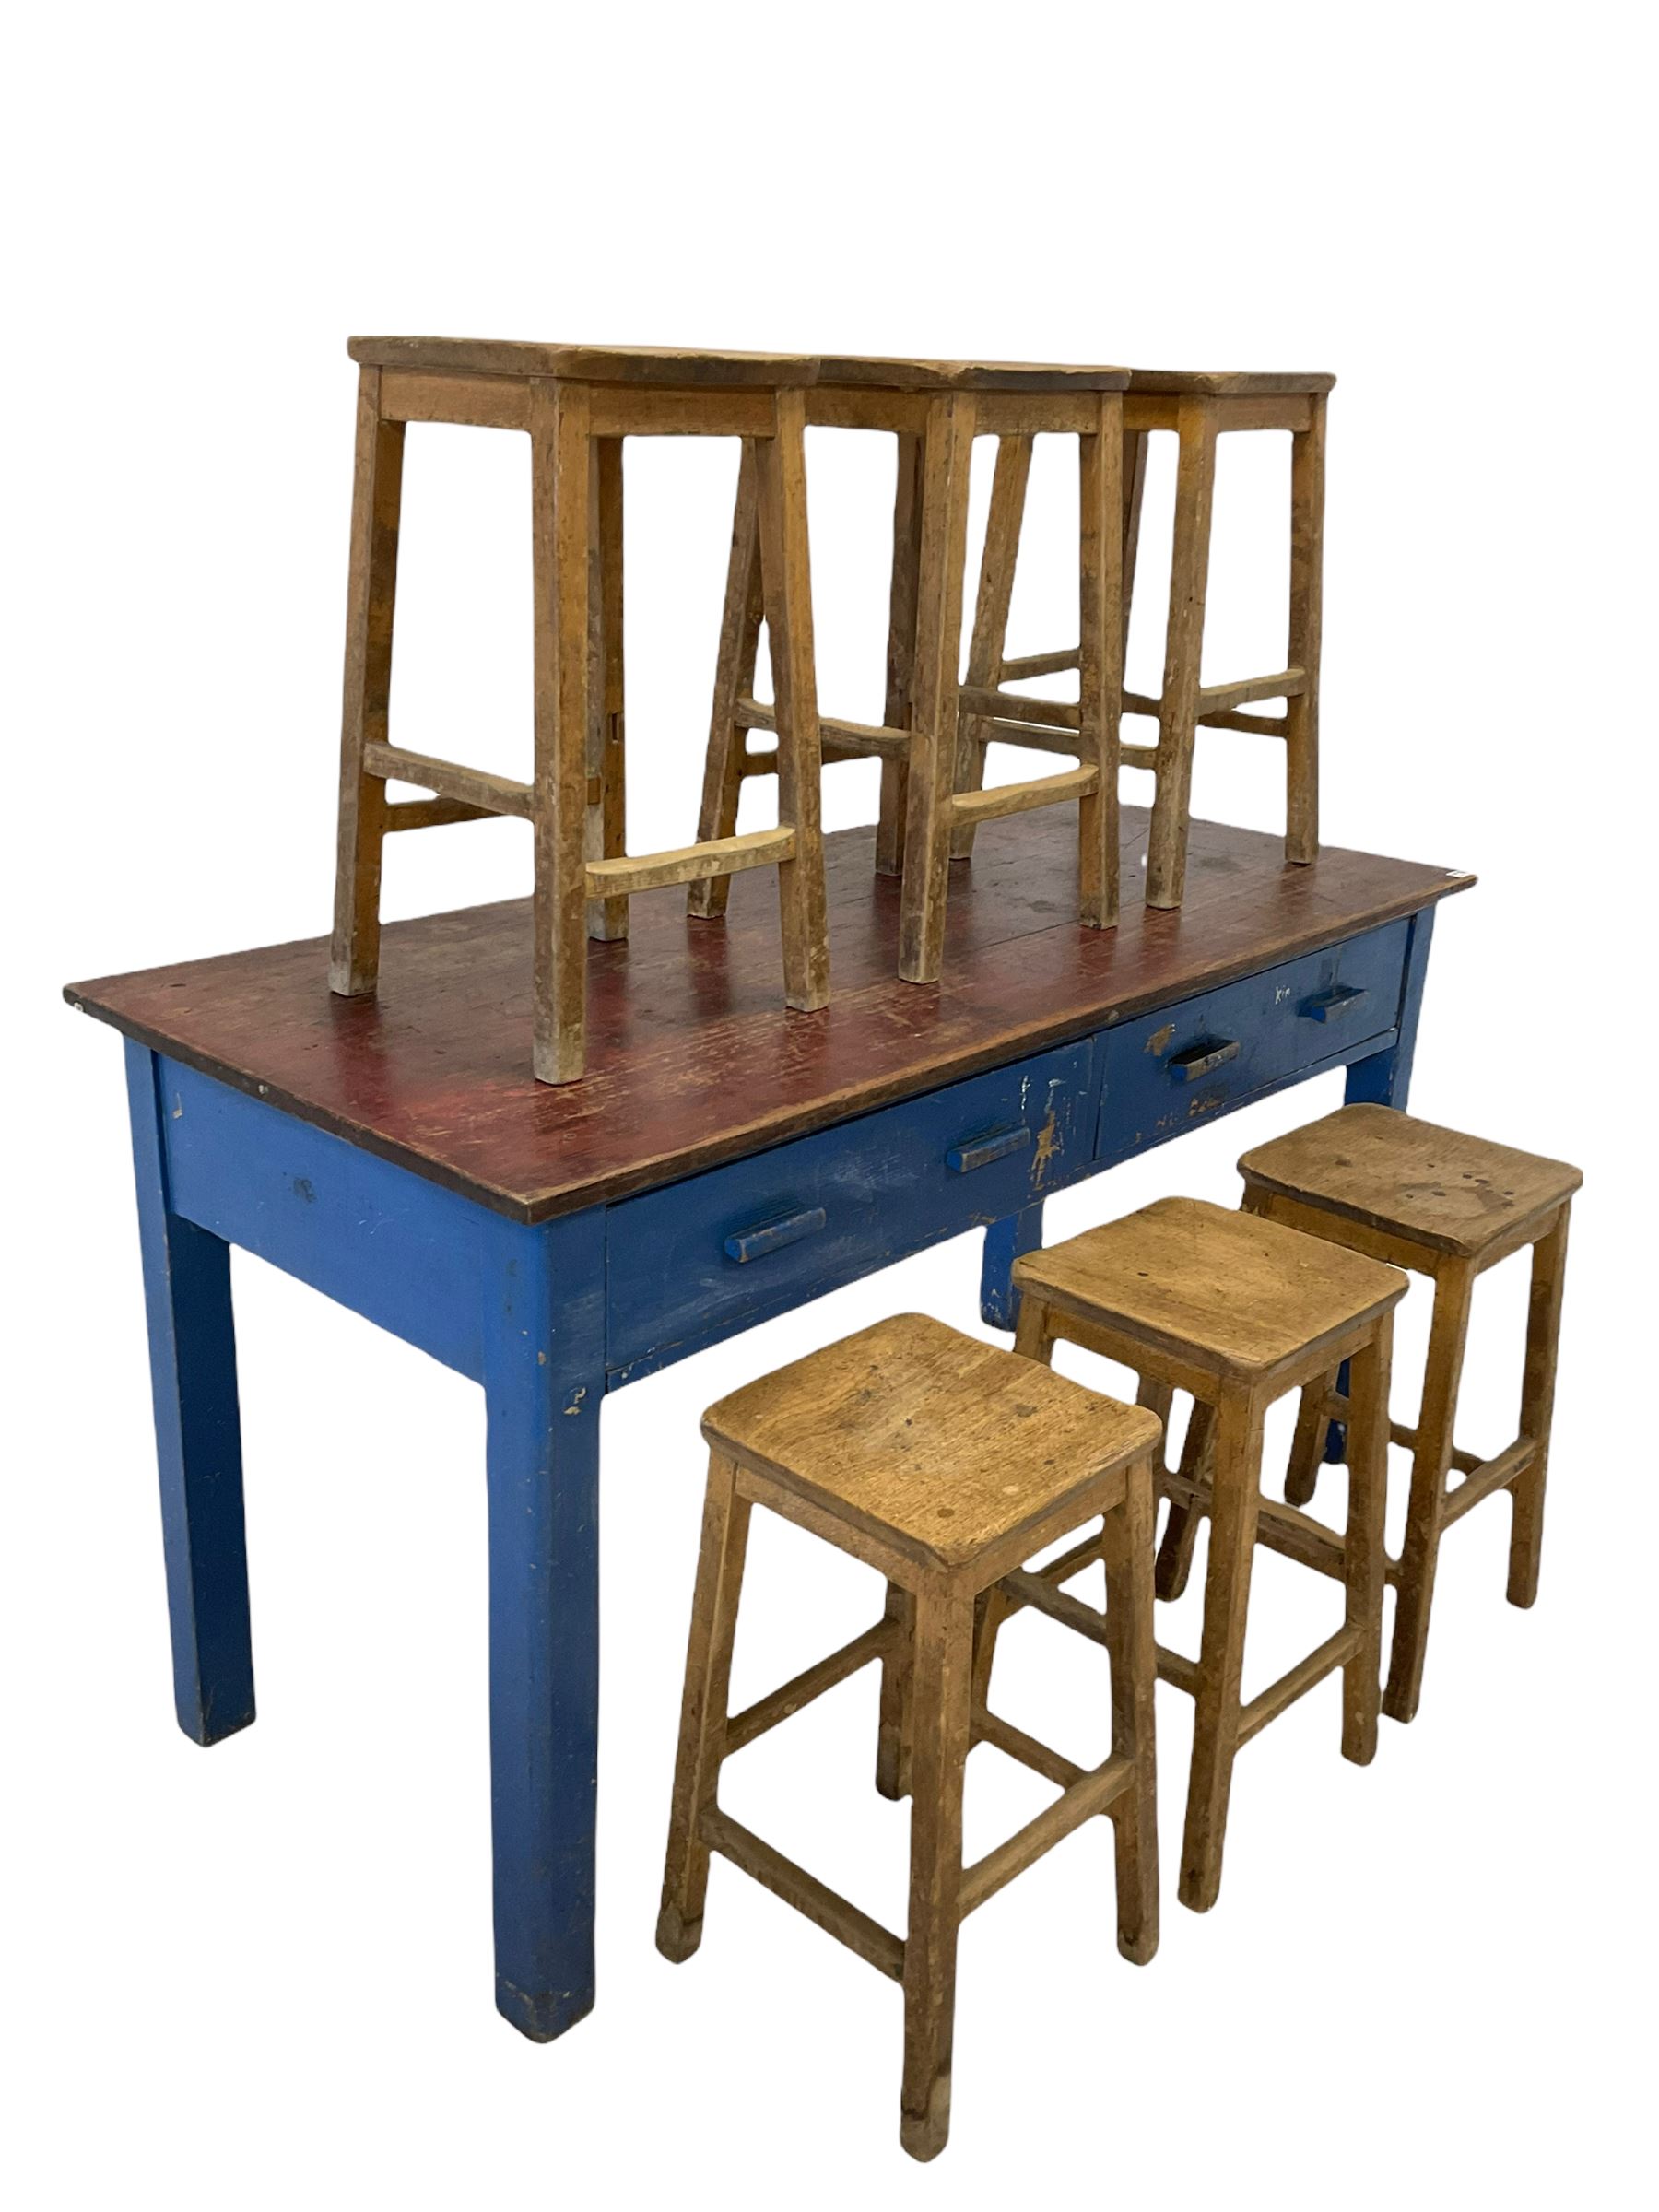 Early to mid 20th century hardwood school laboratory table